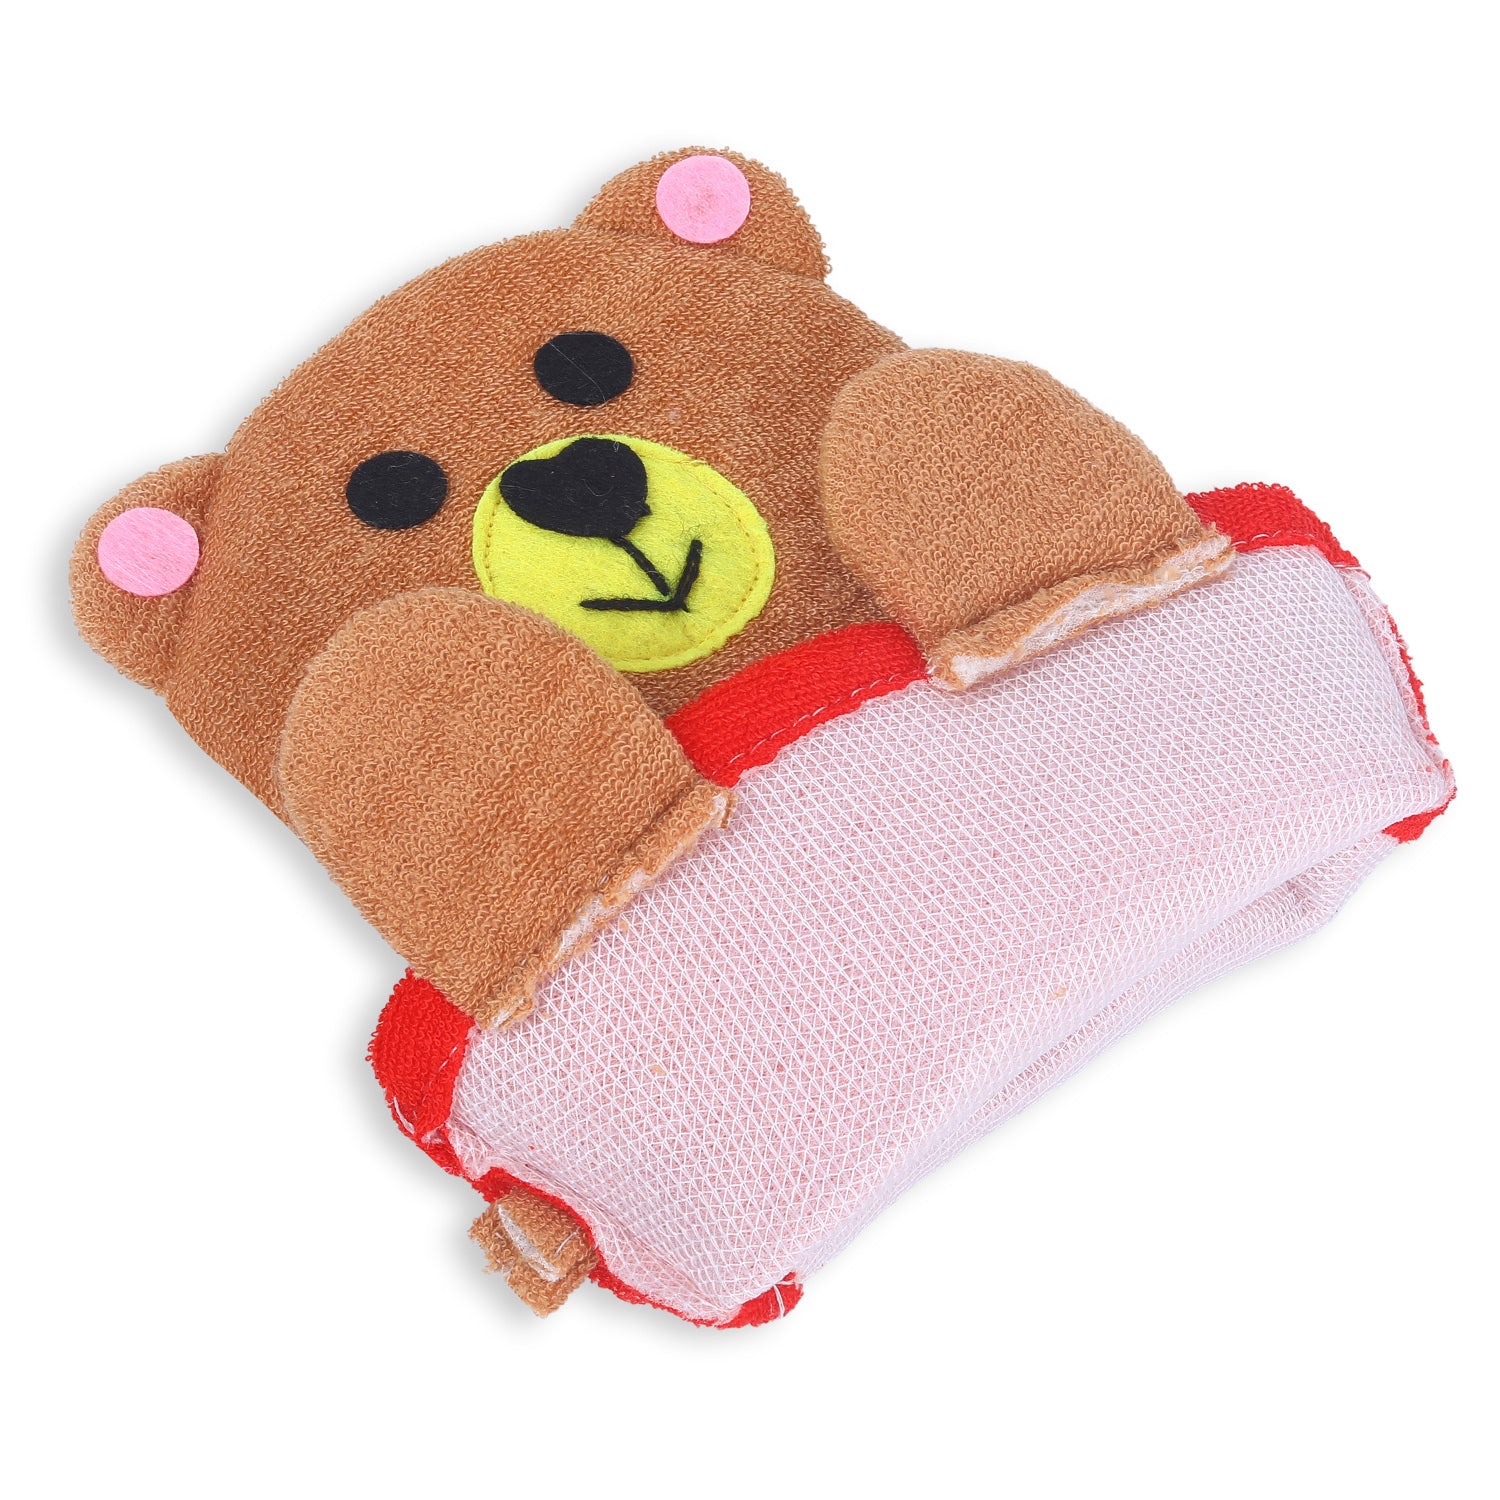 Baby Moo Teddy Bear Bath Time Fun Hand Puppet Loofah Bath Glove - Brown - Baby Moo